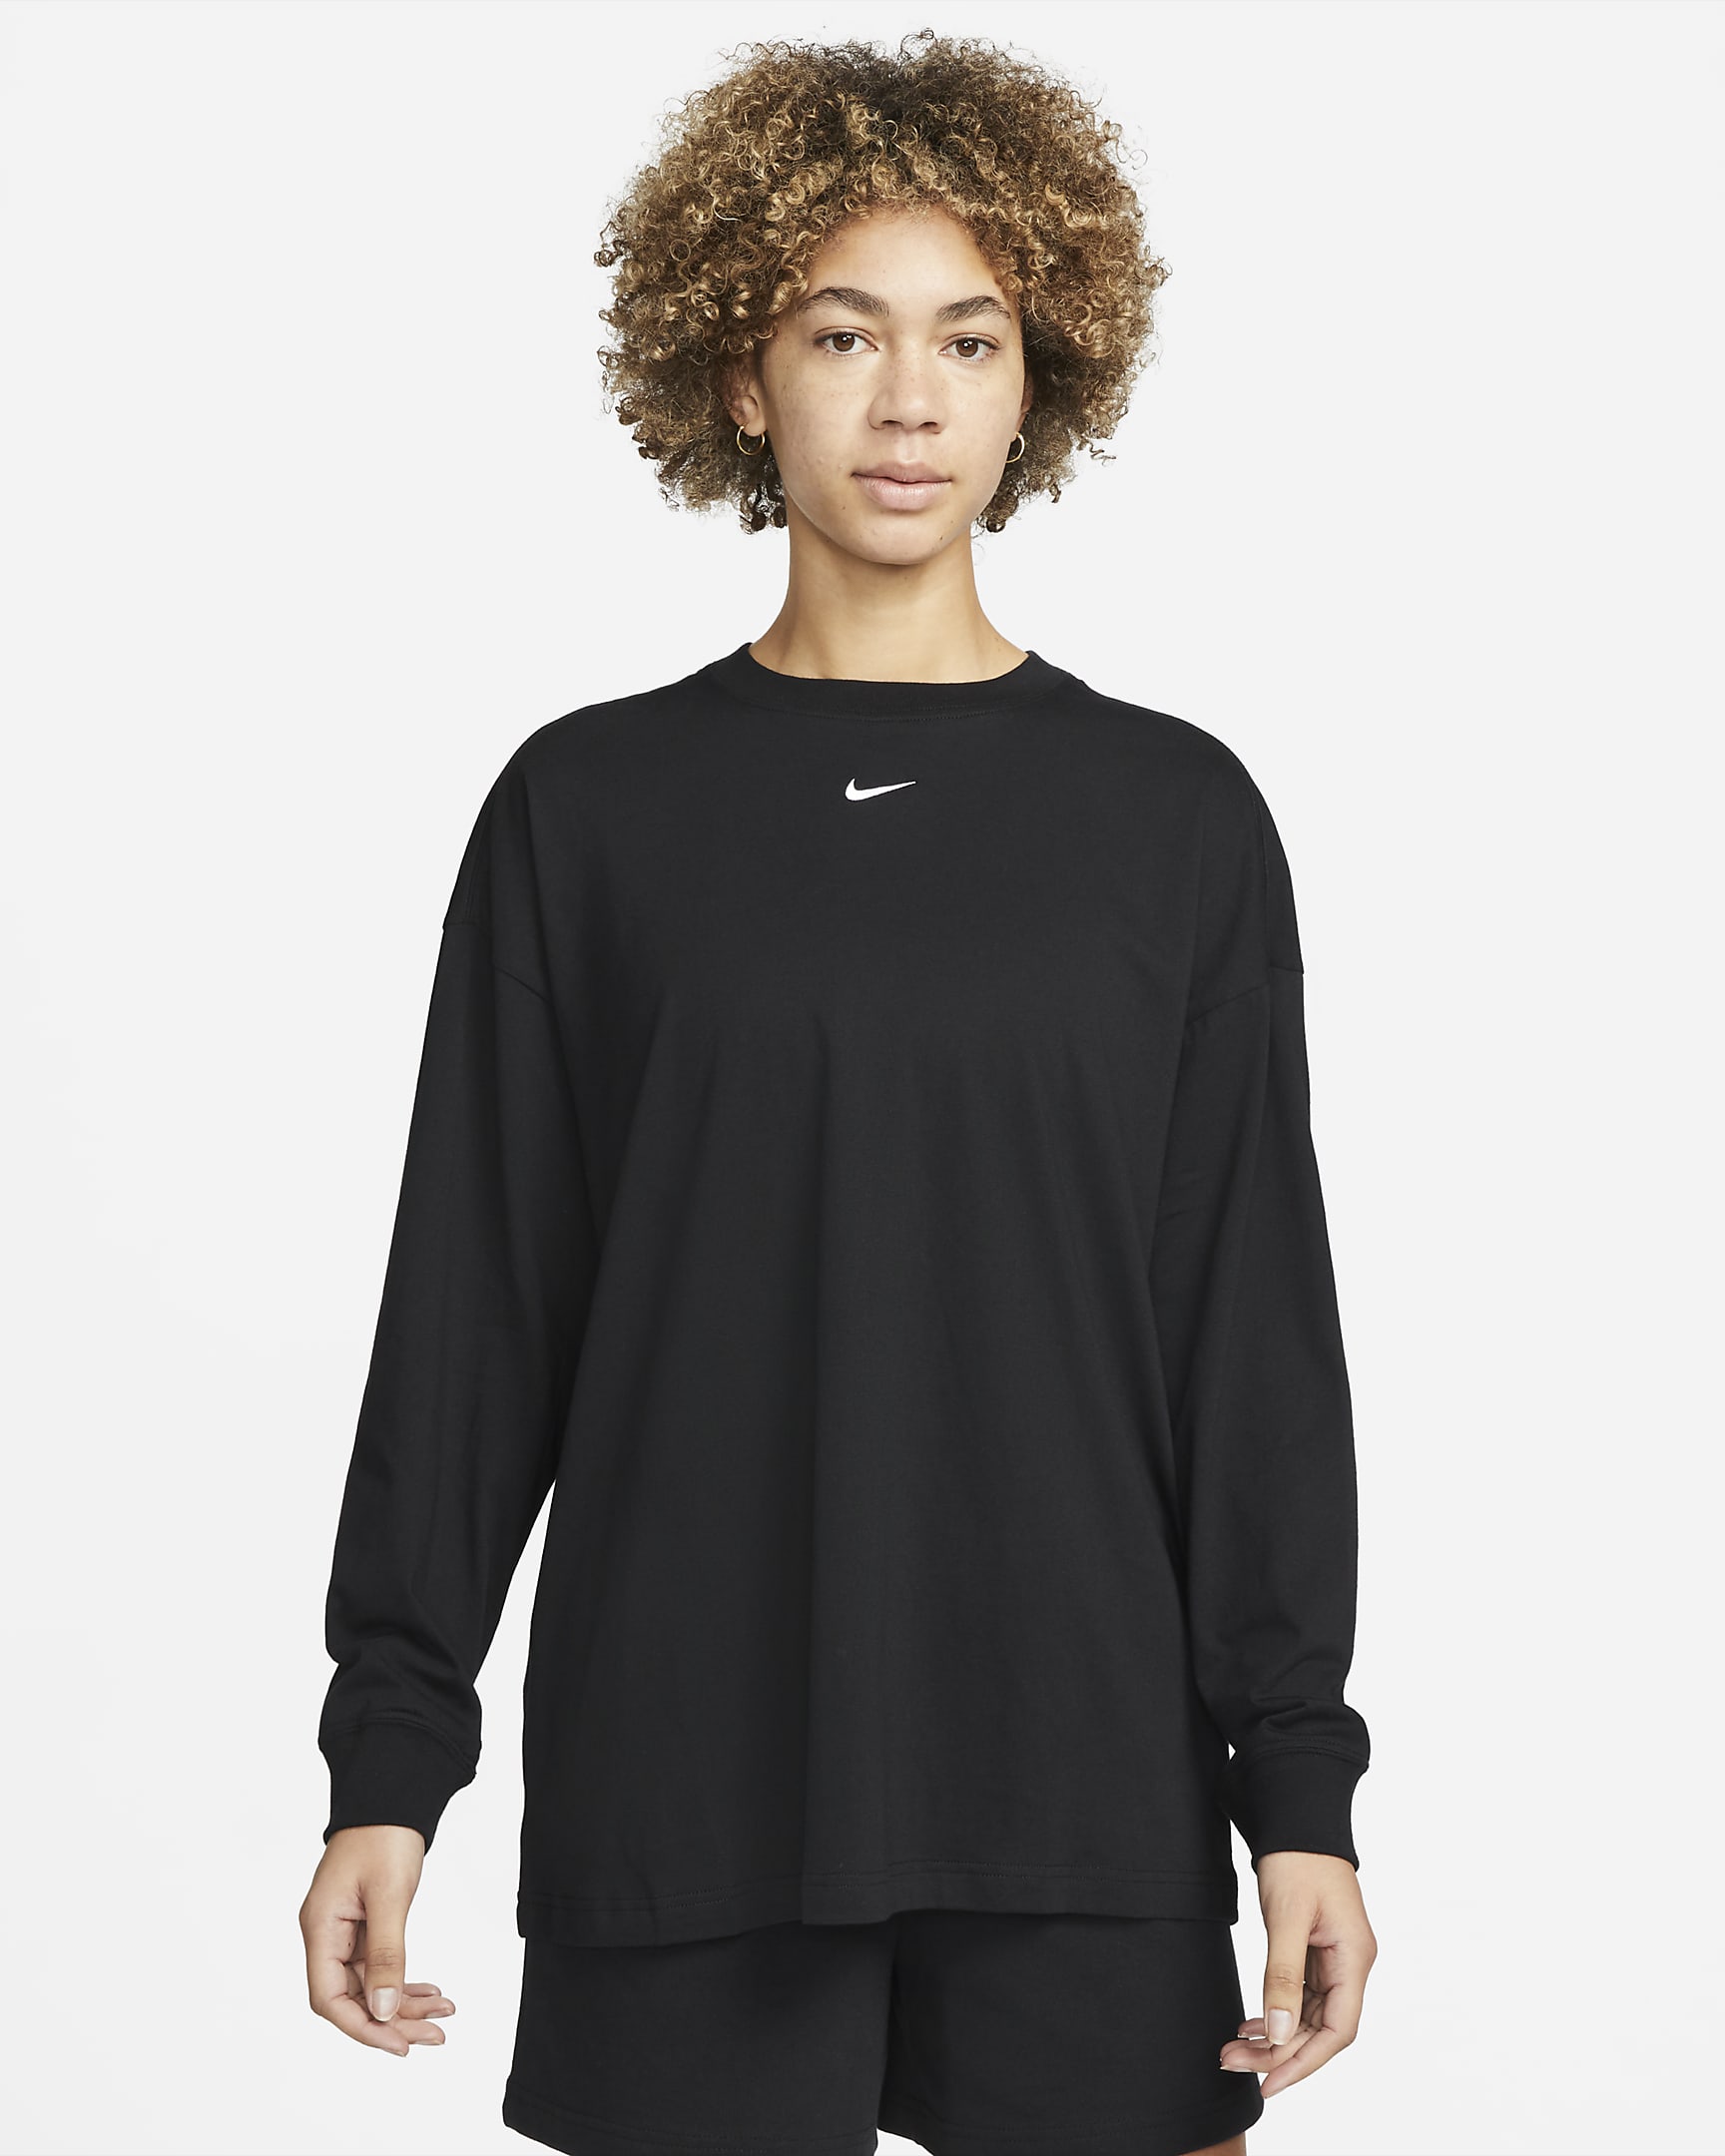 Nike Sportswear Essentials Women's Long-Sleeve Top. Nike.com